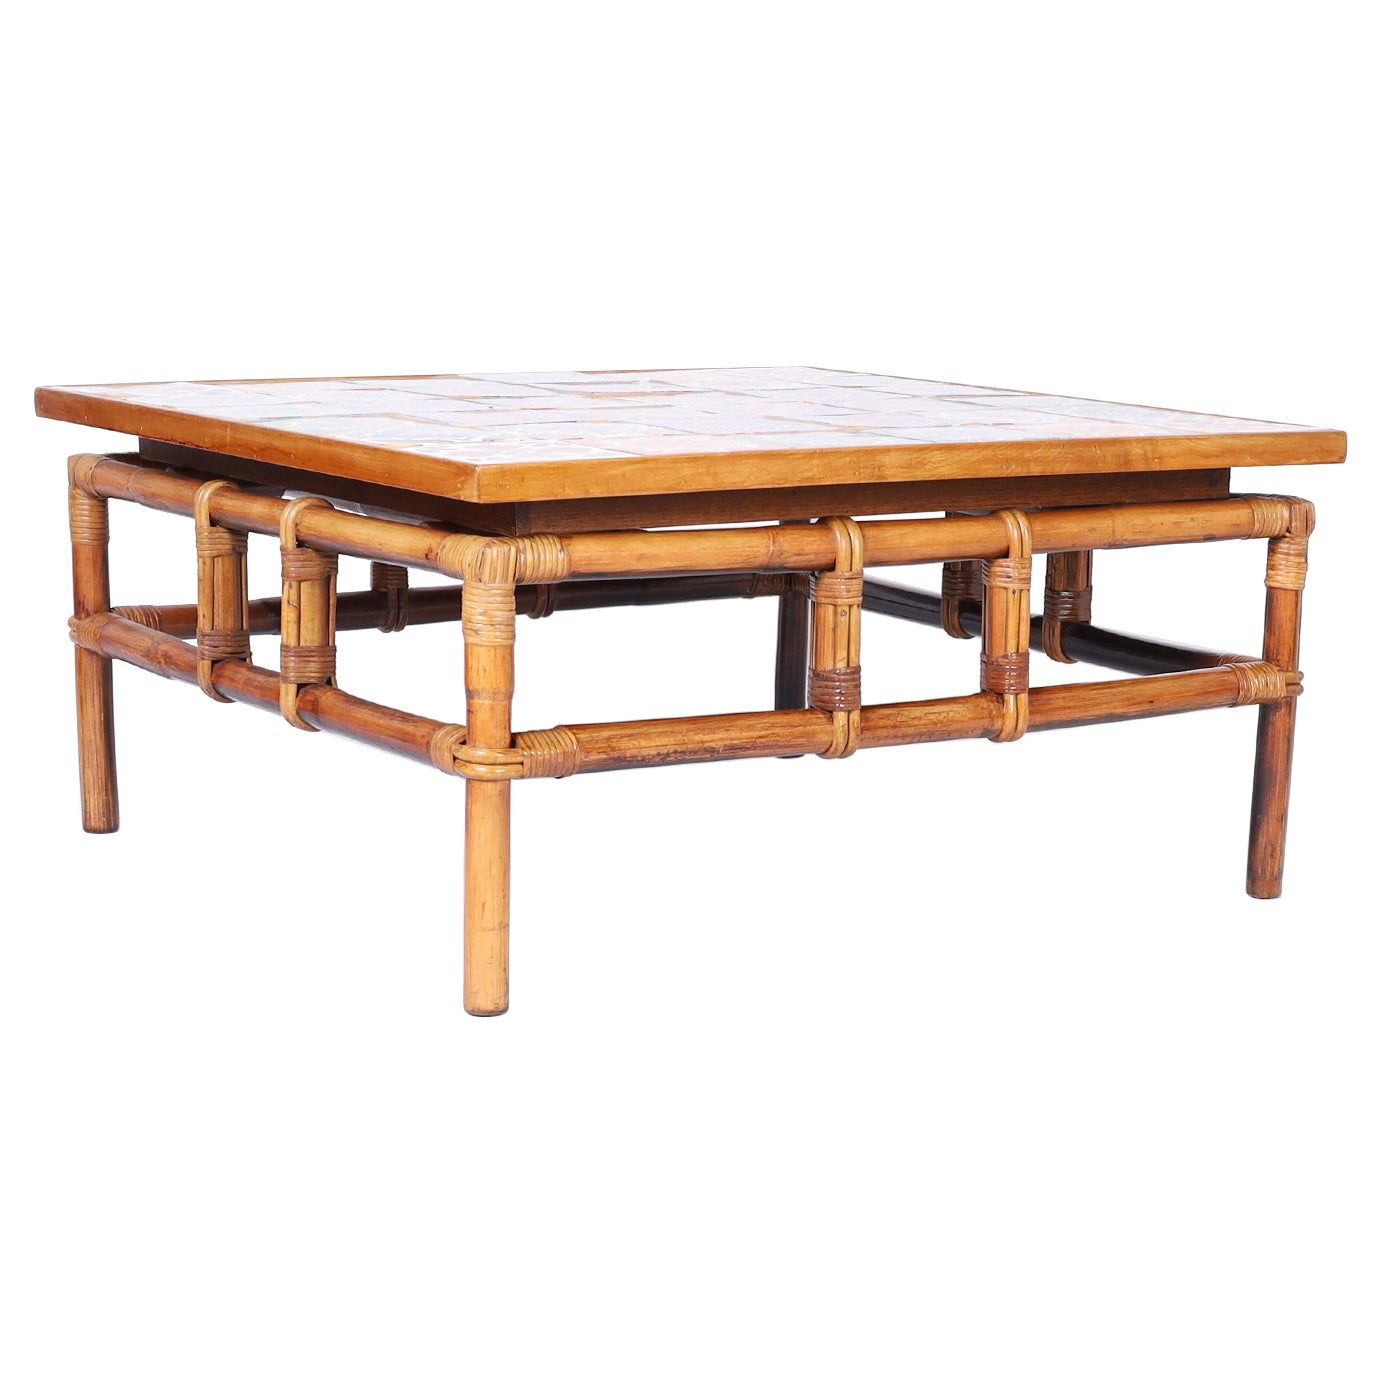 Table basse italienne en faux bambou et plateau en carreaux